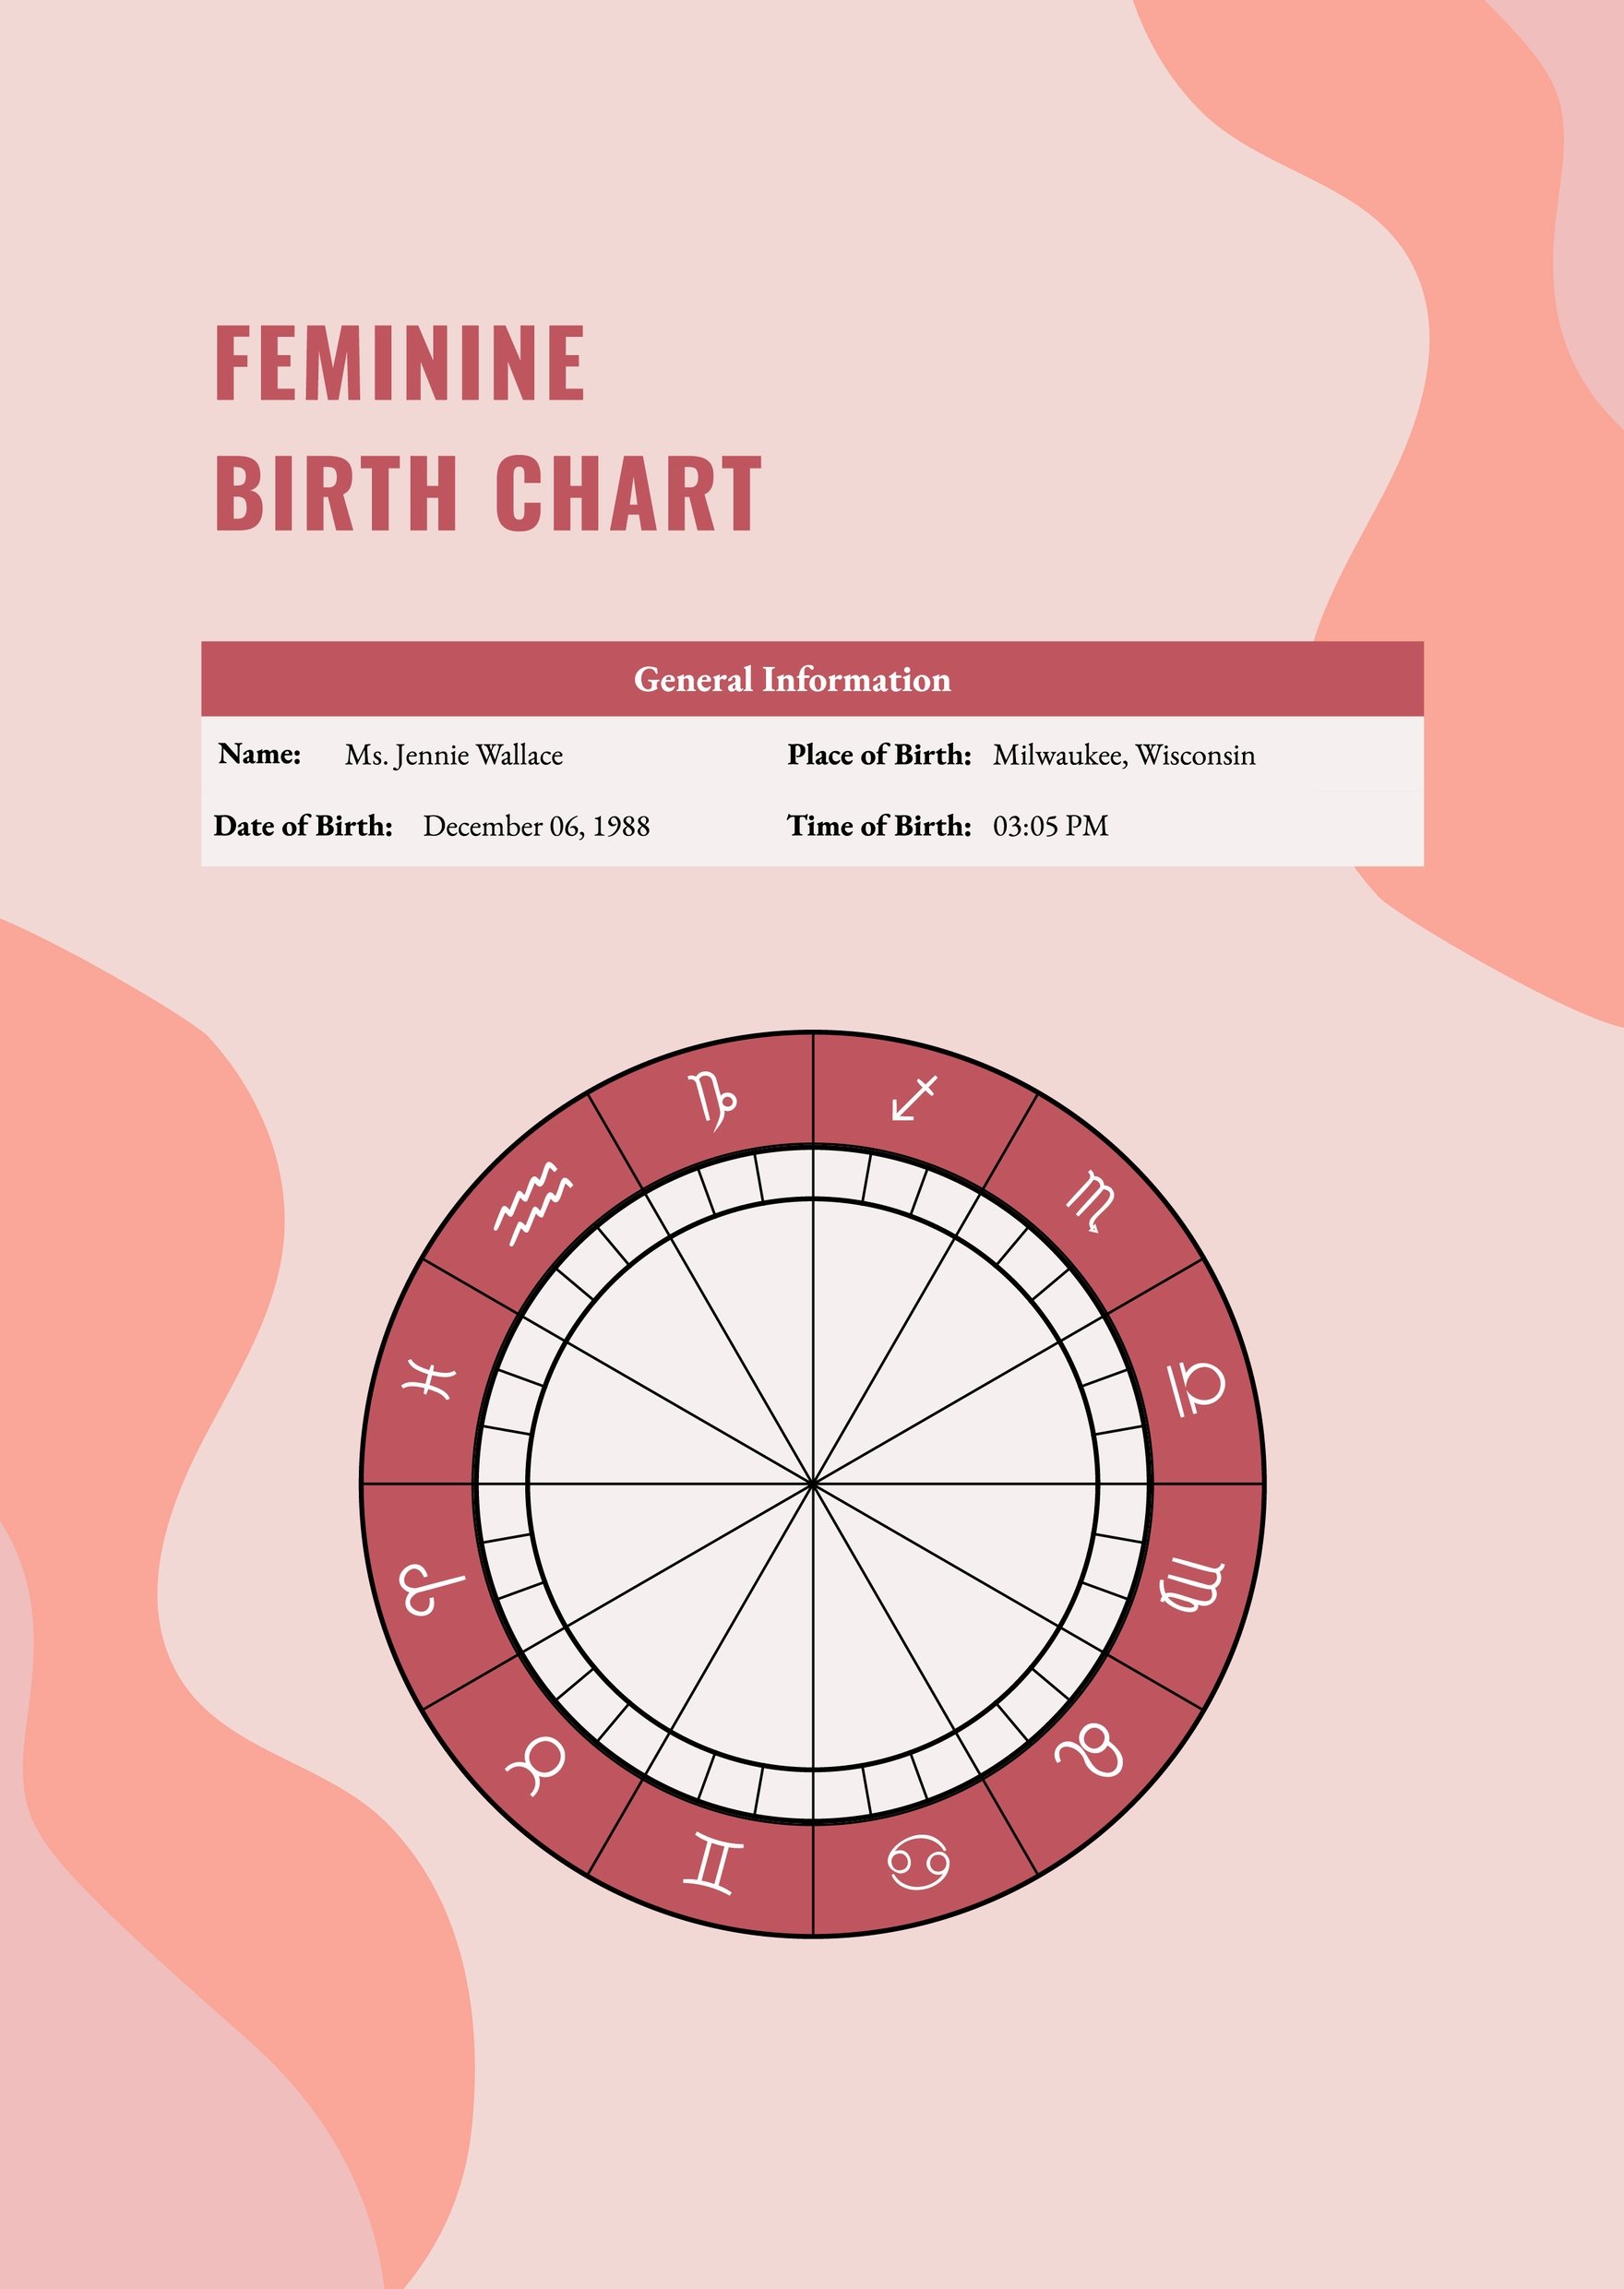 Feminine Birth Chart Template